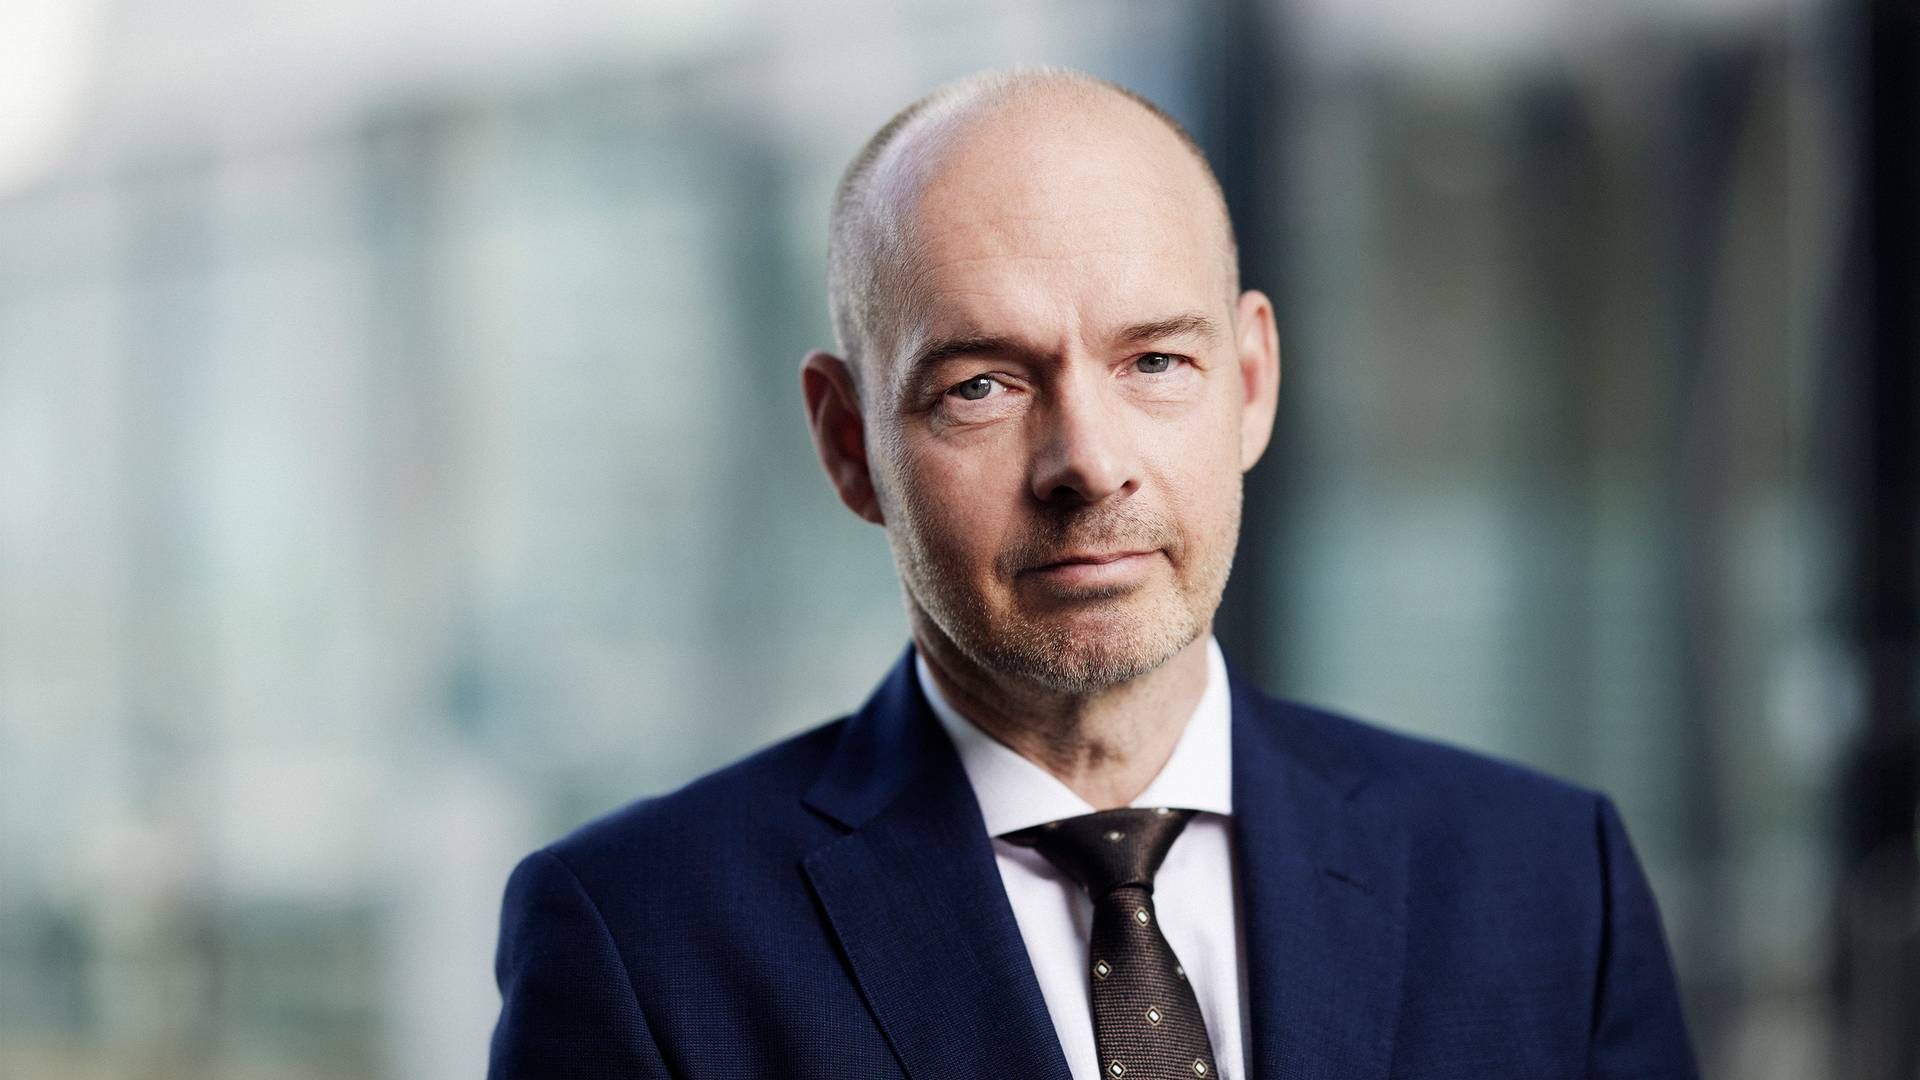 Jakob Vejlø, chief strategist at BankInvest | Photo: Pr/ Bankinvest